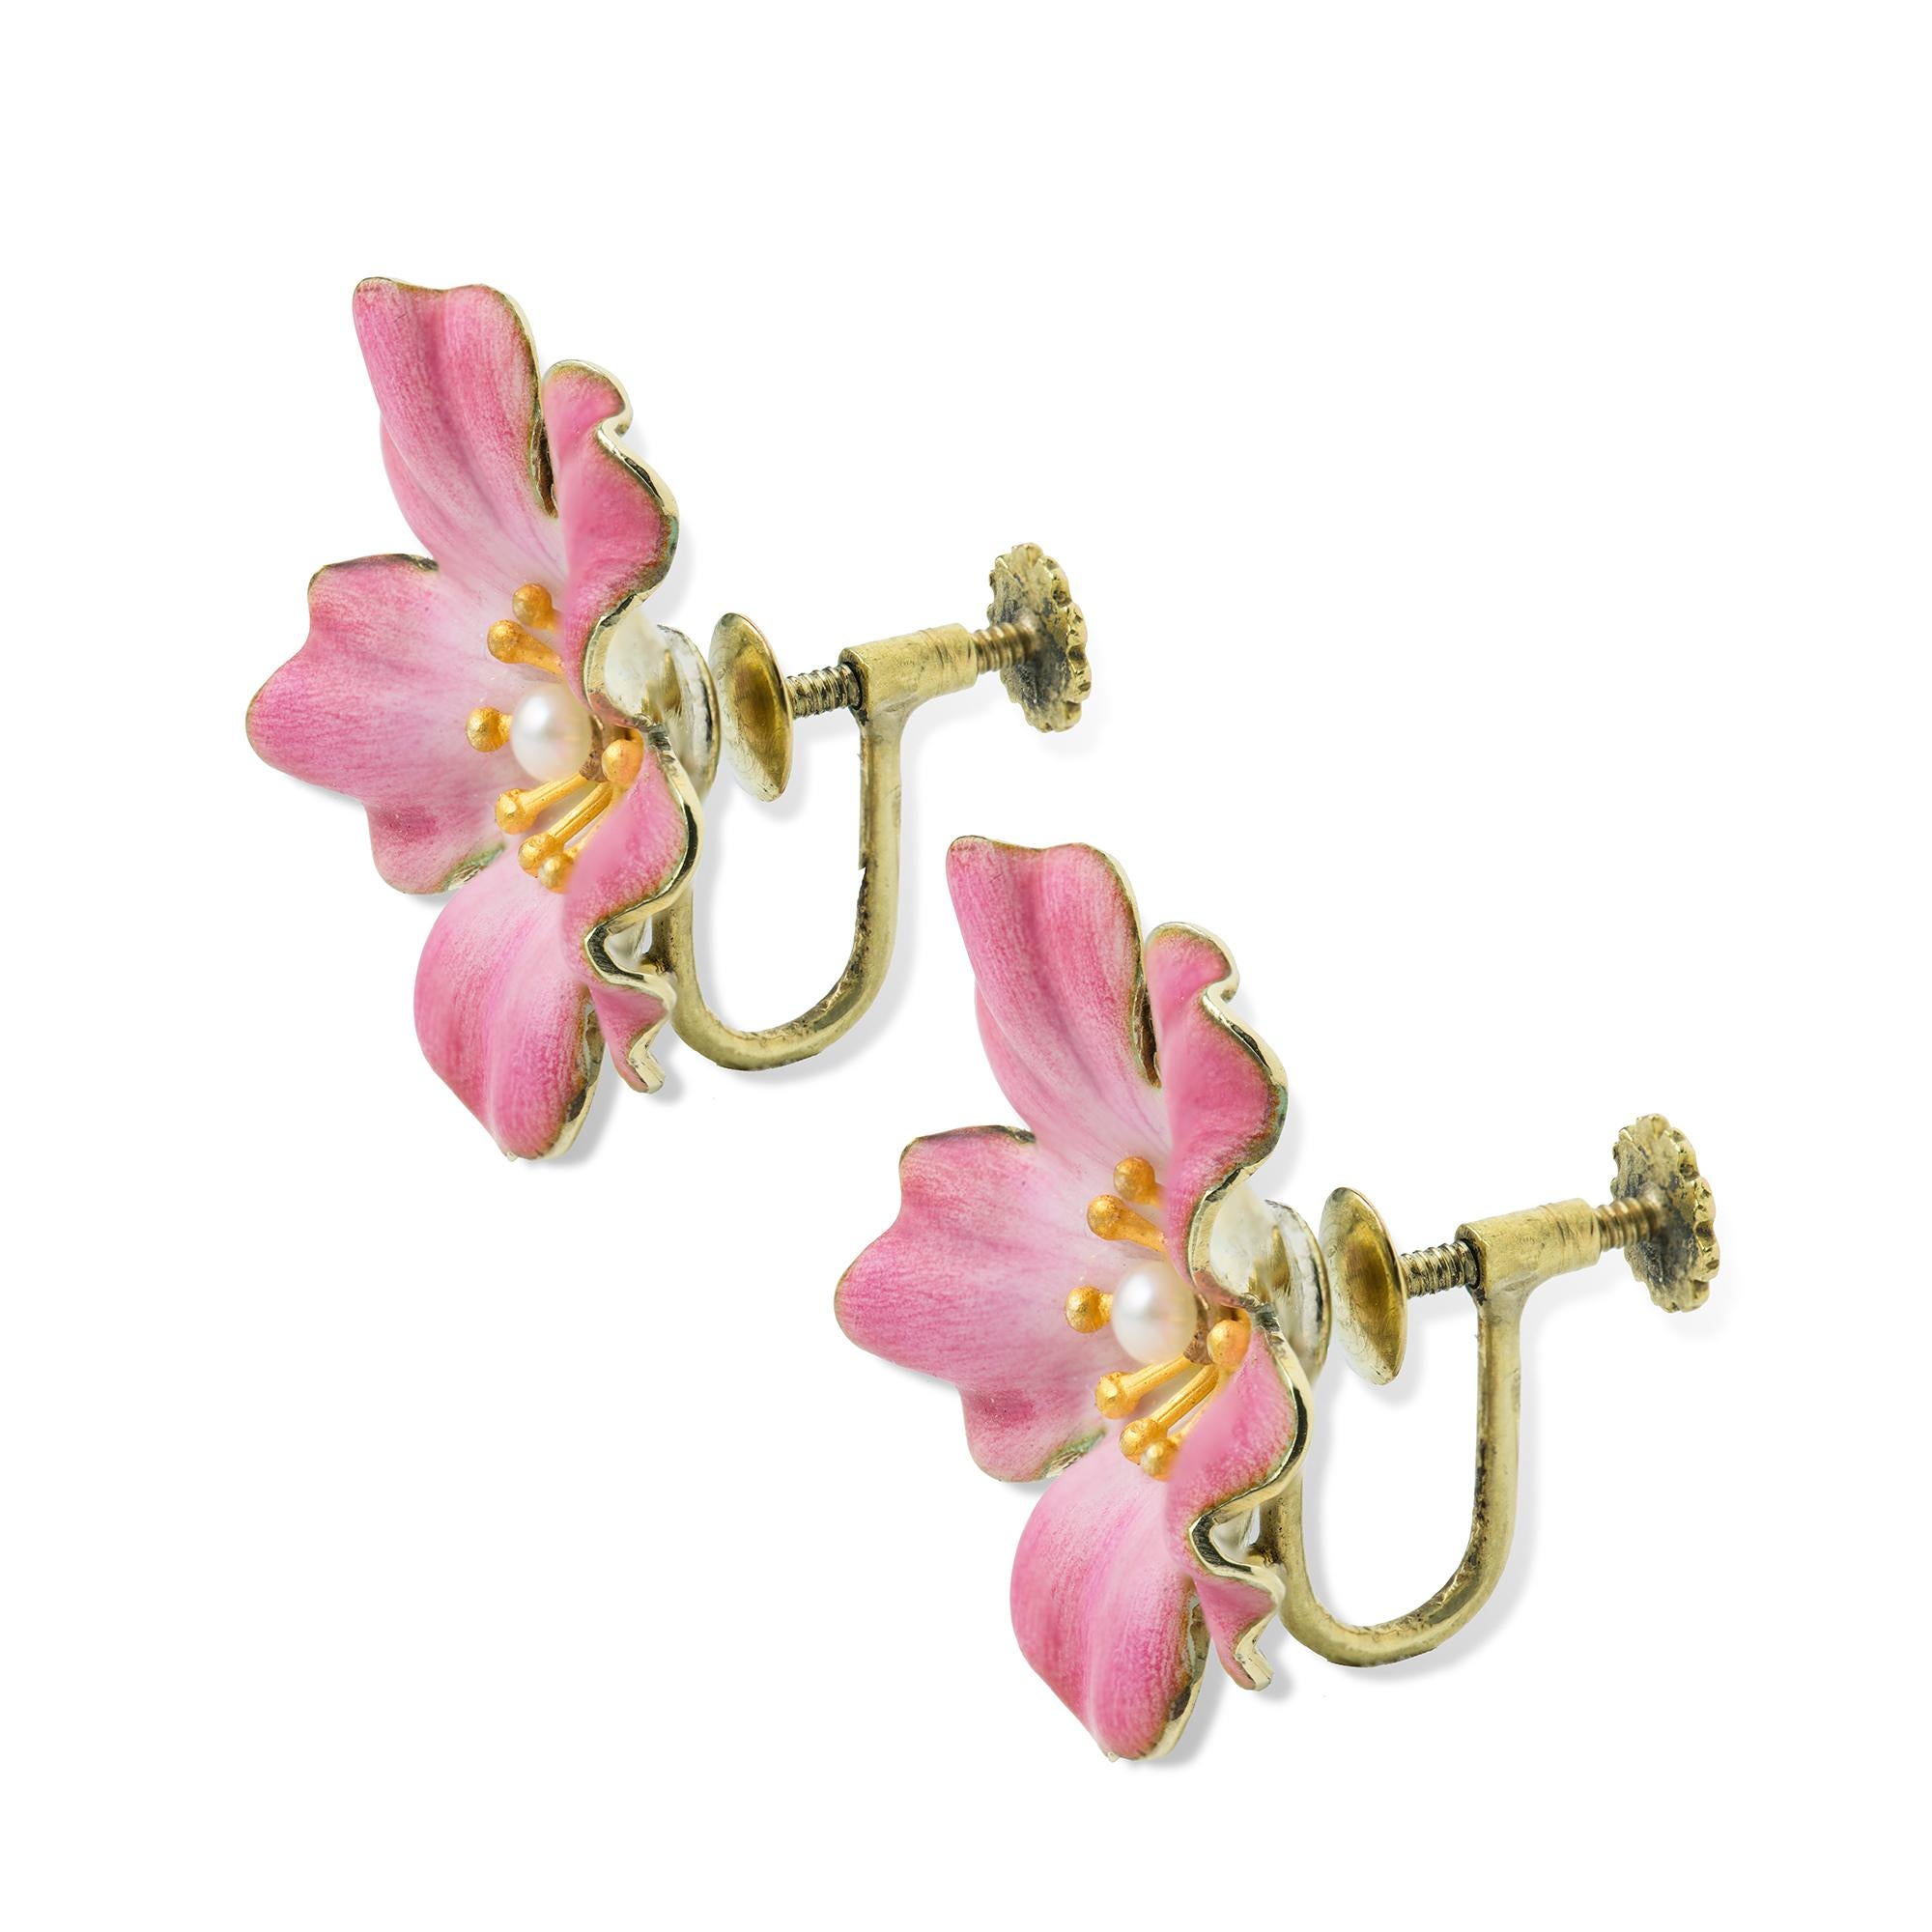 Art Nouveau Fine Art-Nouveau Enamel and Pearl Brooch and Earrings For Sale